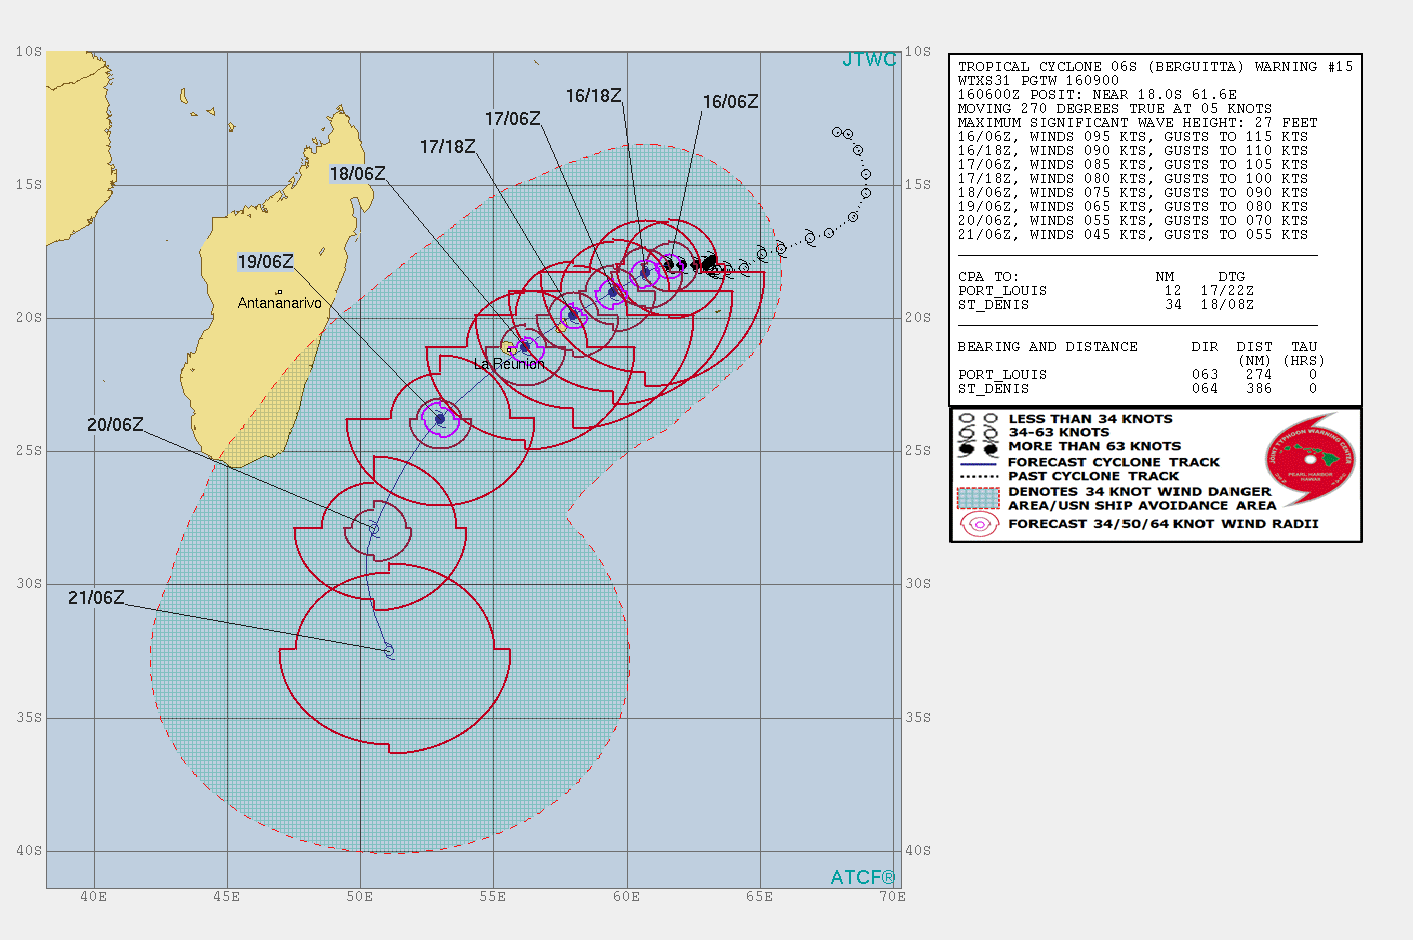 Tropical Cyclone Berguitta JTWC forecast track at 09:00 UTC on January 16, 2018